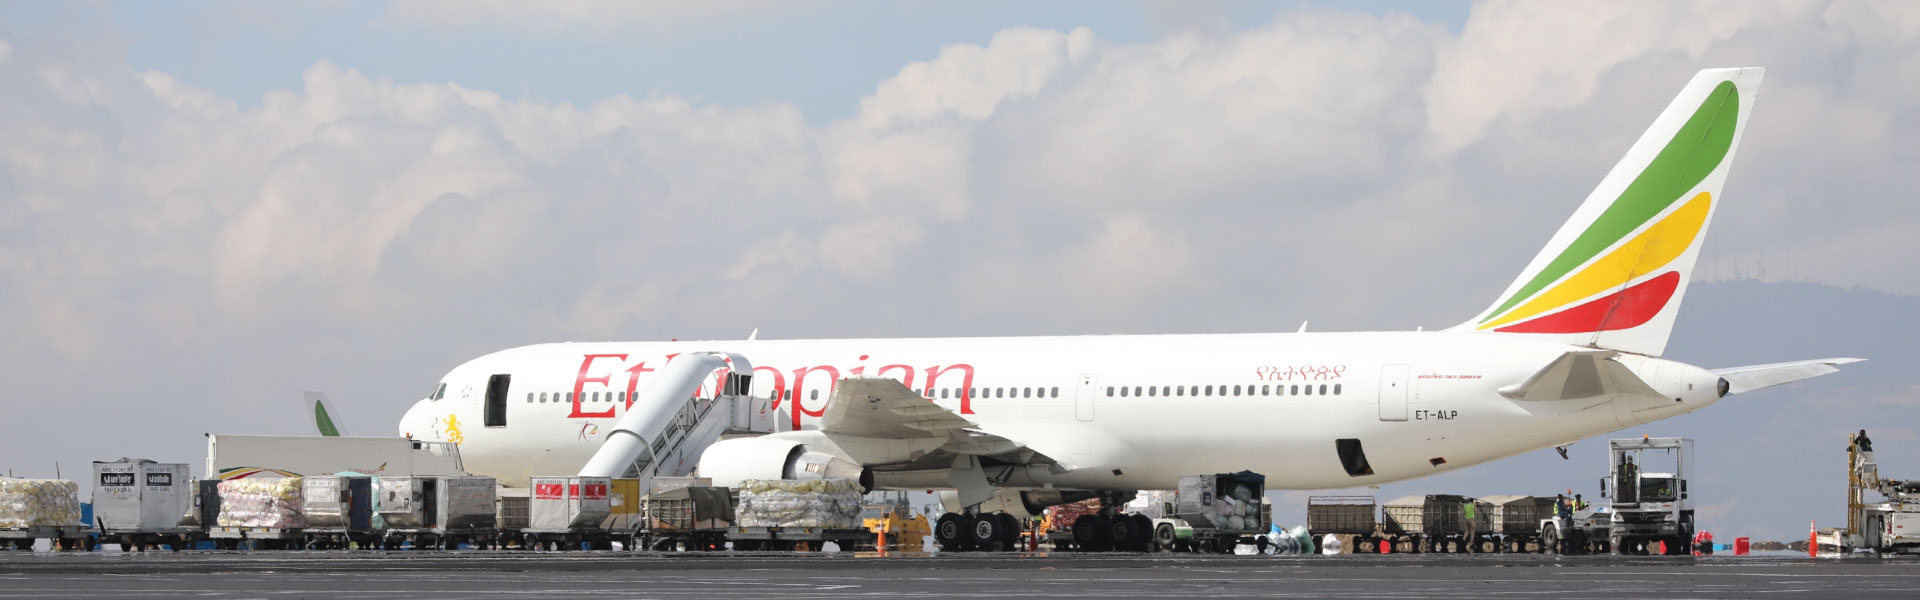 Ethiopian Airlines Ground Planes